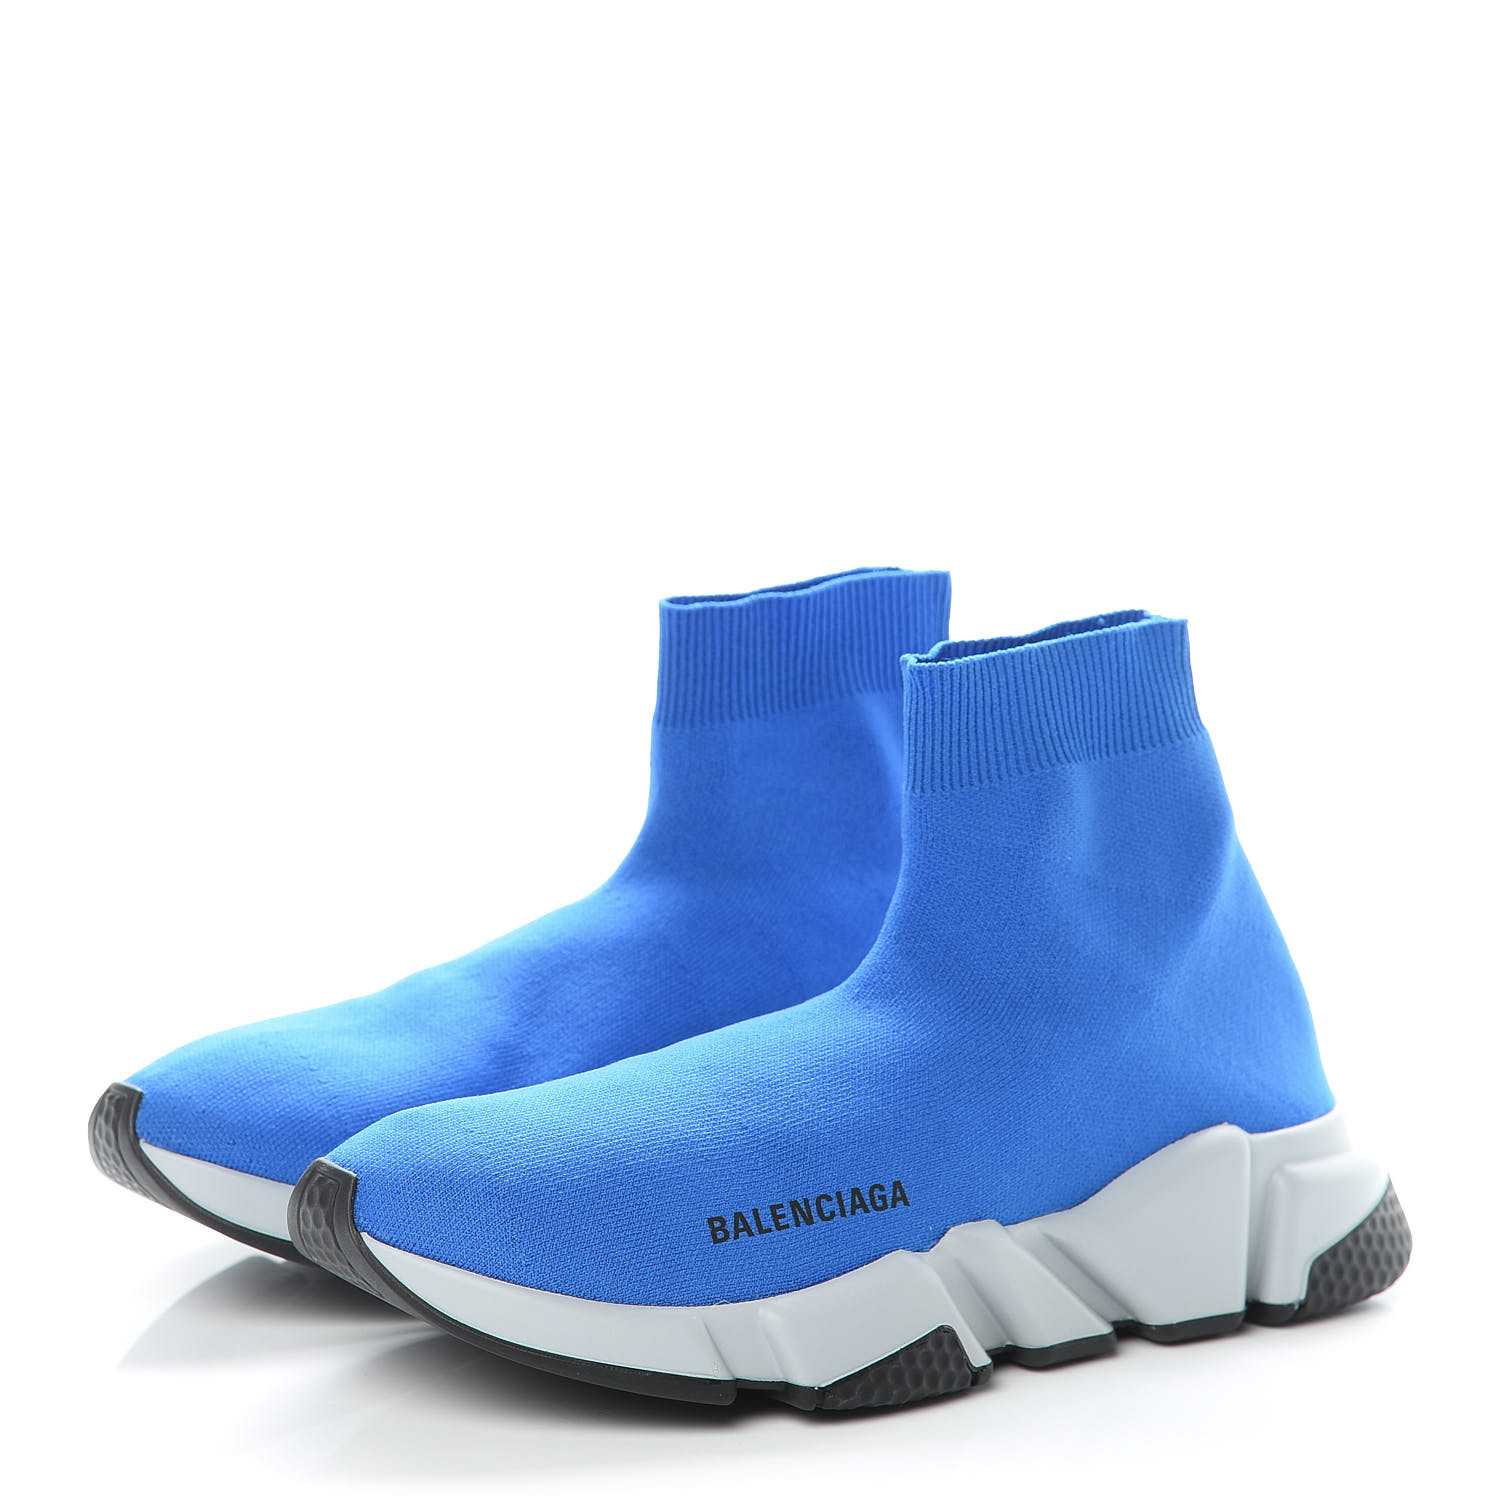 BALENCIAGA Neoprene Knit Speed Trainer Sneakers 6 Bleu 480679